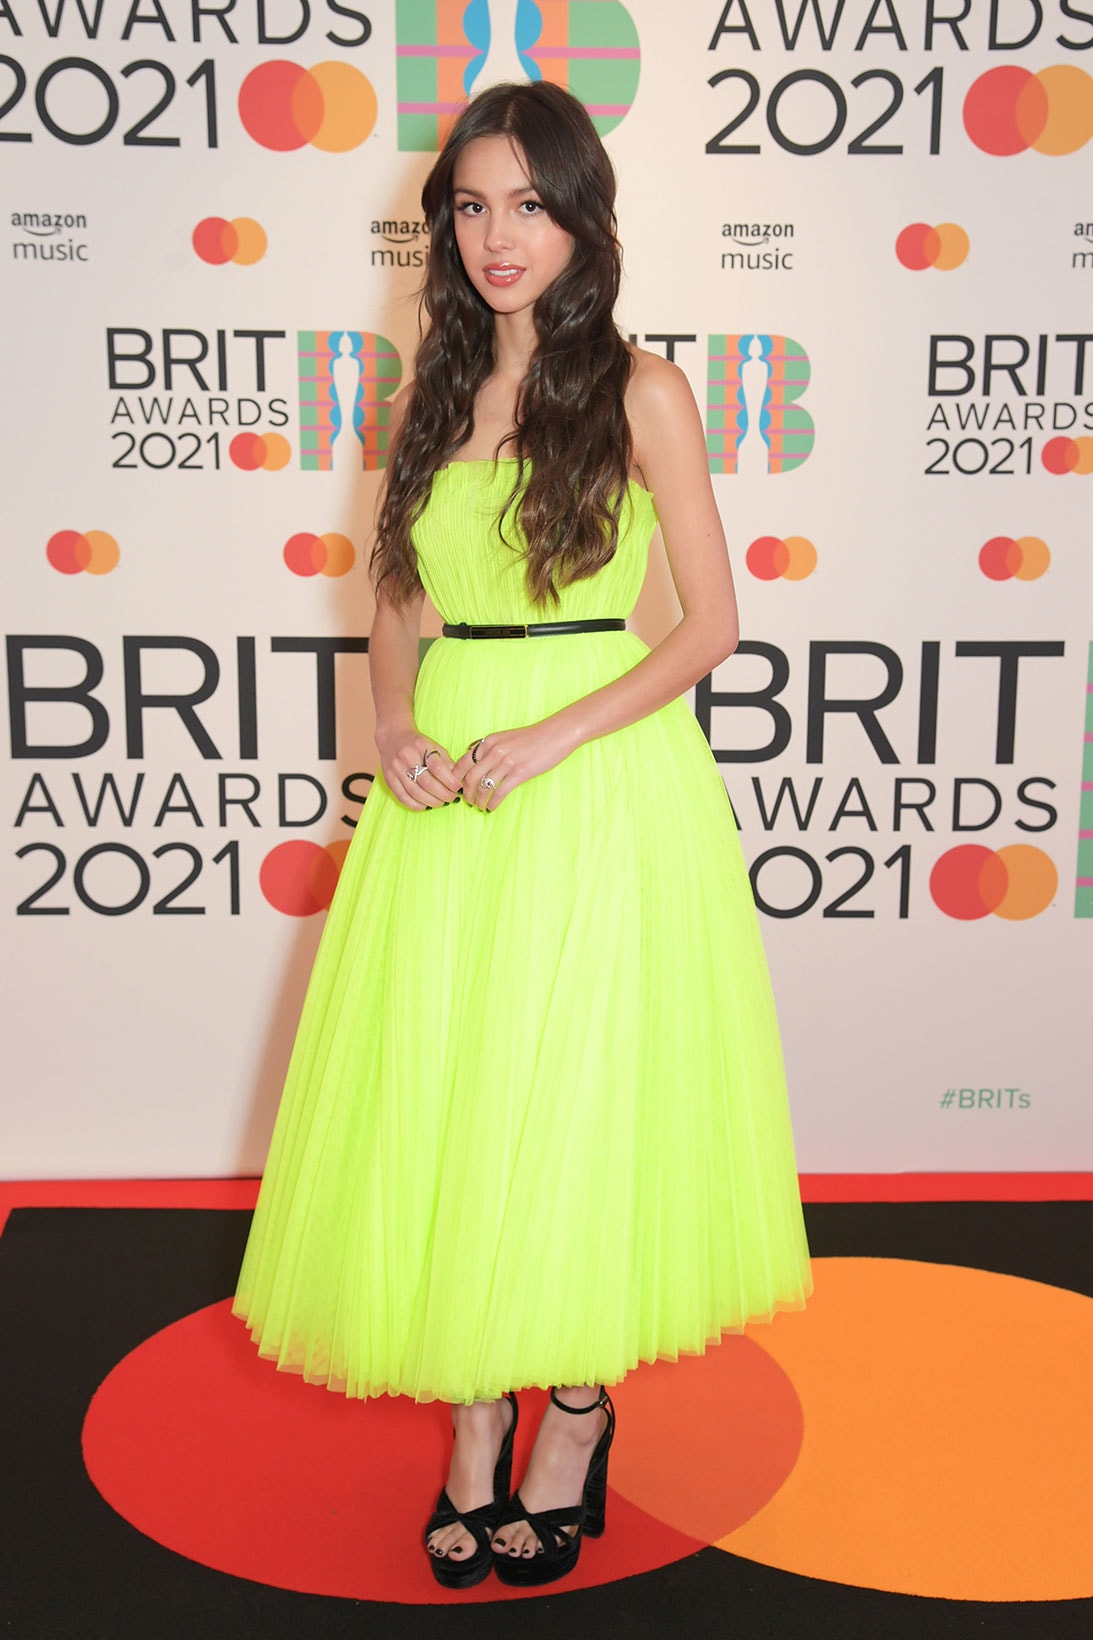 brit awards 2021 red carpet best dressed celebrities olivia rodrigo christian dior